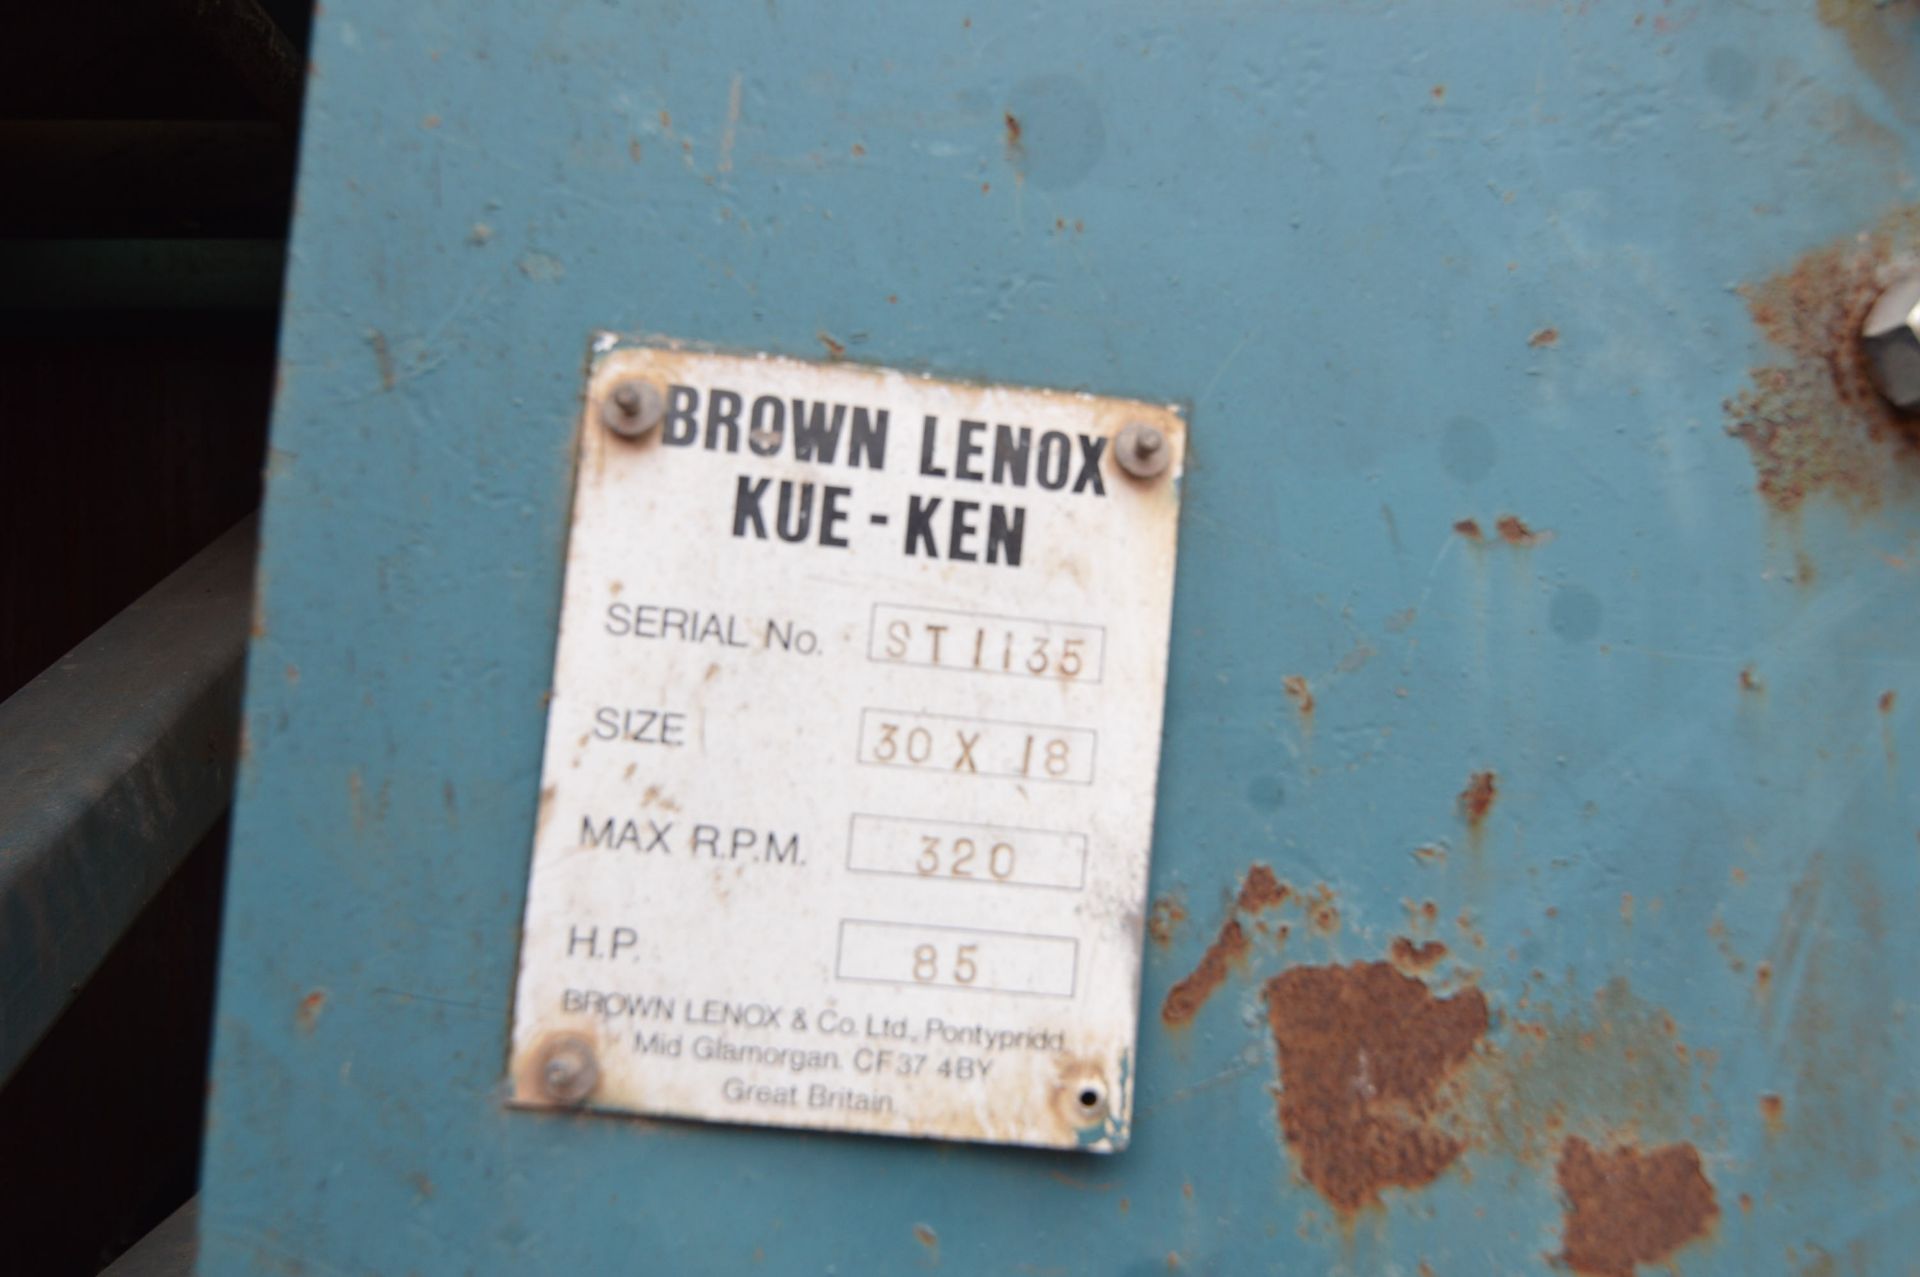 Brown Lenox Kue-Ken 30 x 18 BIG HOOK RORO SKID MOUNTED CRUSHER, VIN SL9301856VP00902, with Kue-Ken - Image 5 of 7